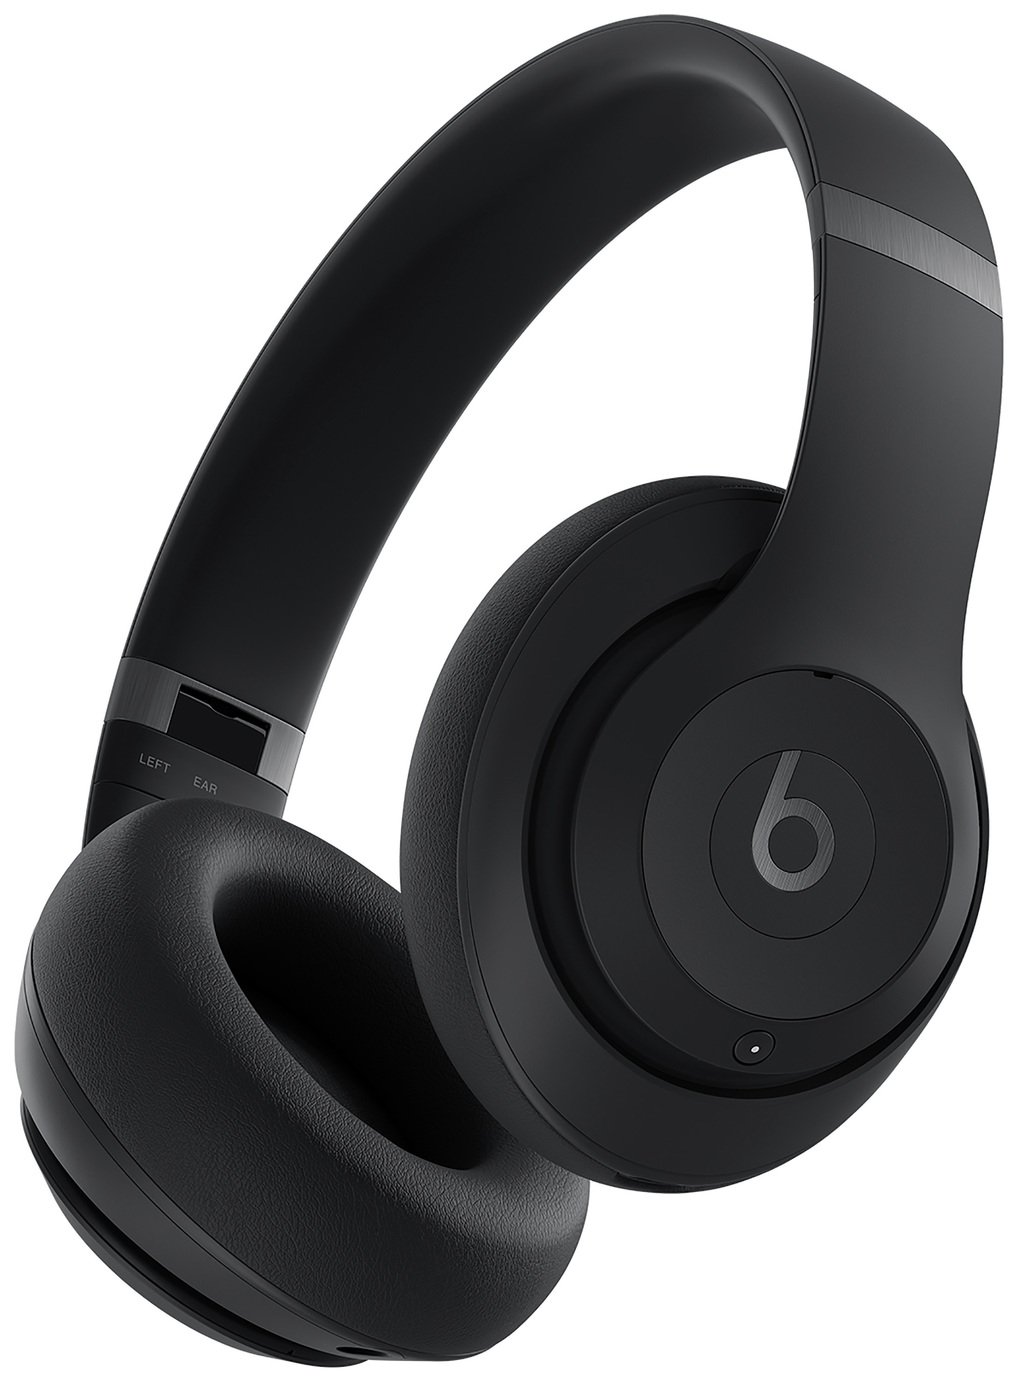 Beats Studio Pro ANC Over-Ear Wireless Headphones - Black